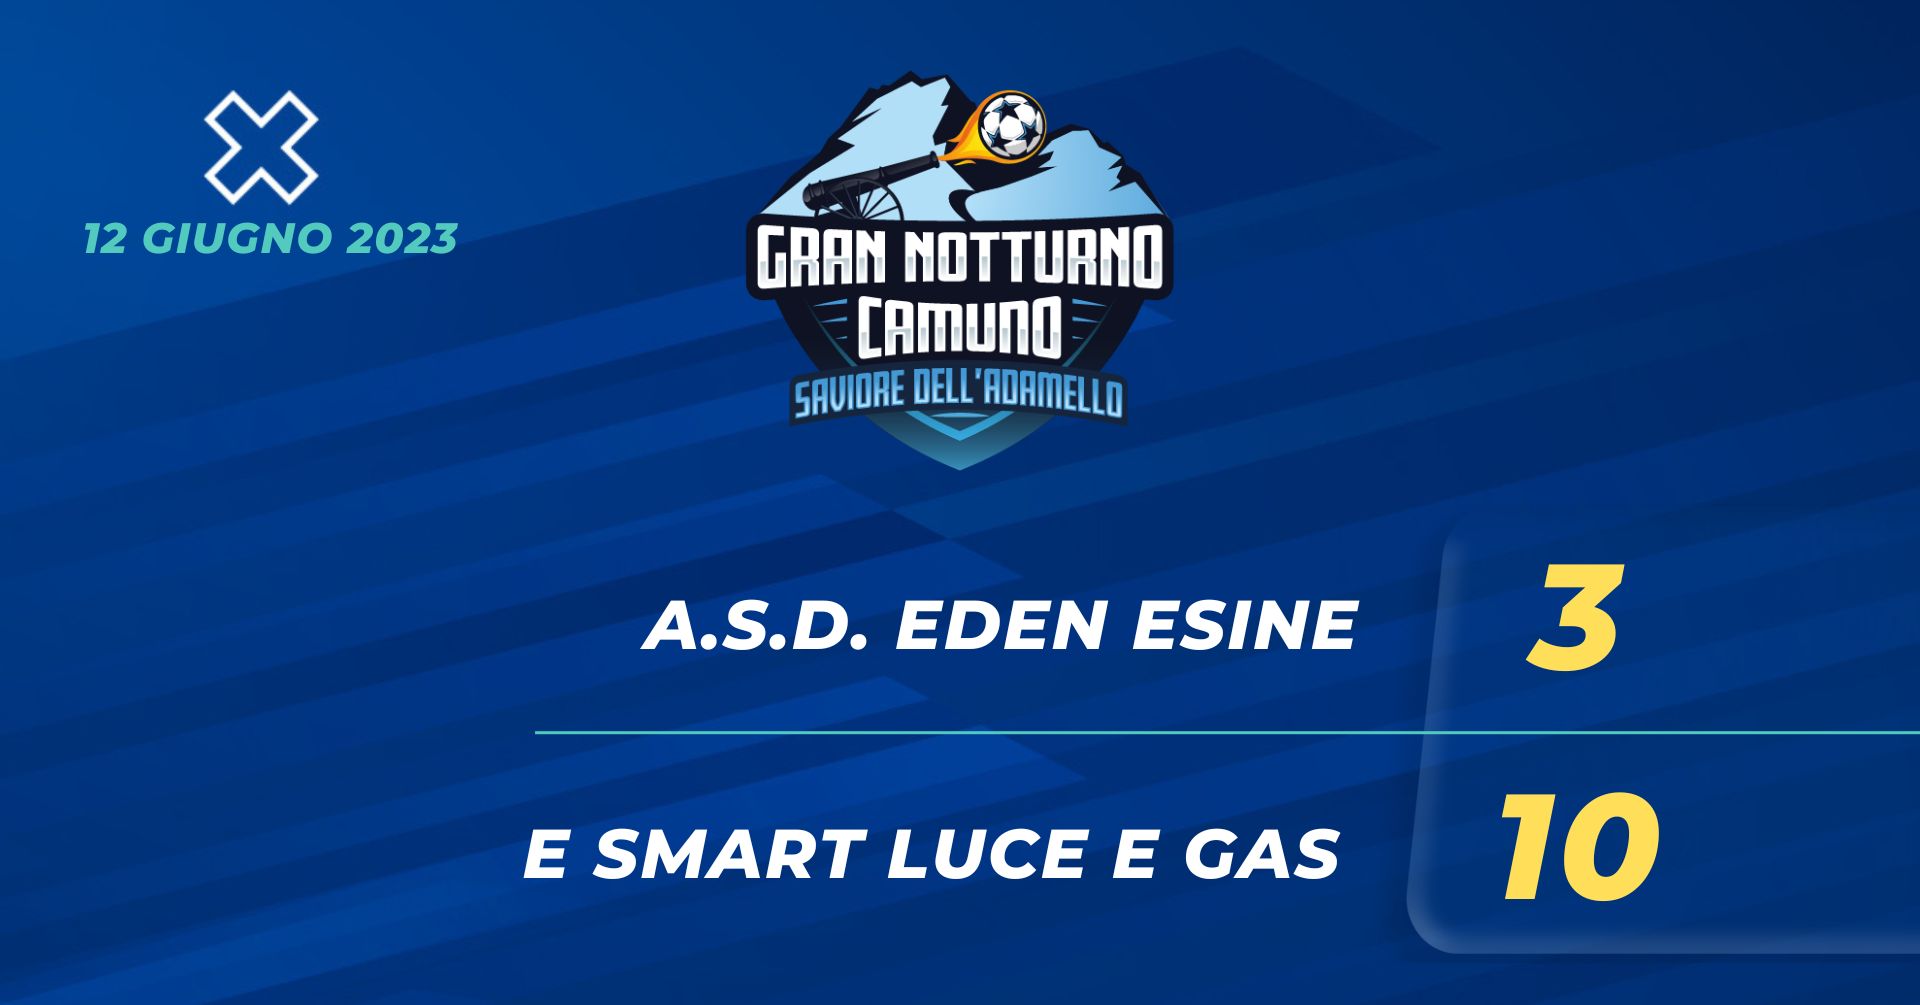 A.S.D. EDEN ESINE - E SMART LUCE E GAS 3 - 10